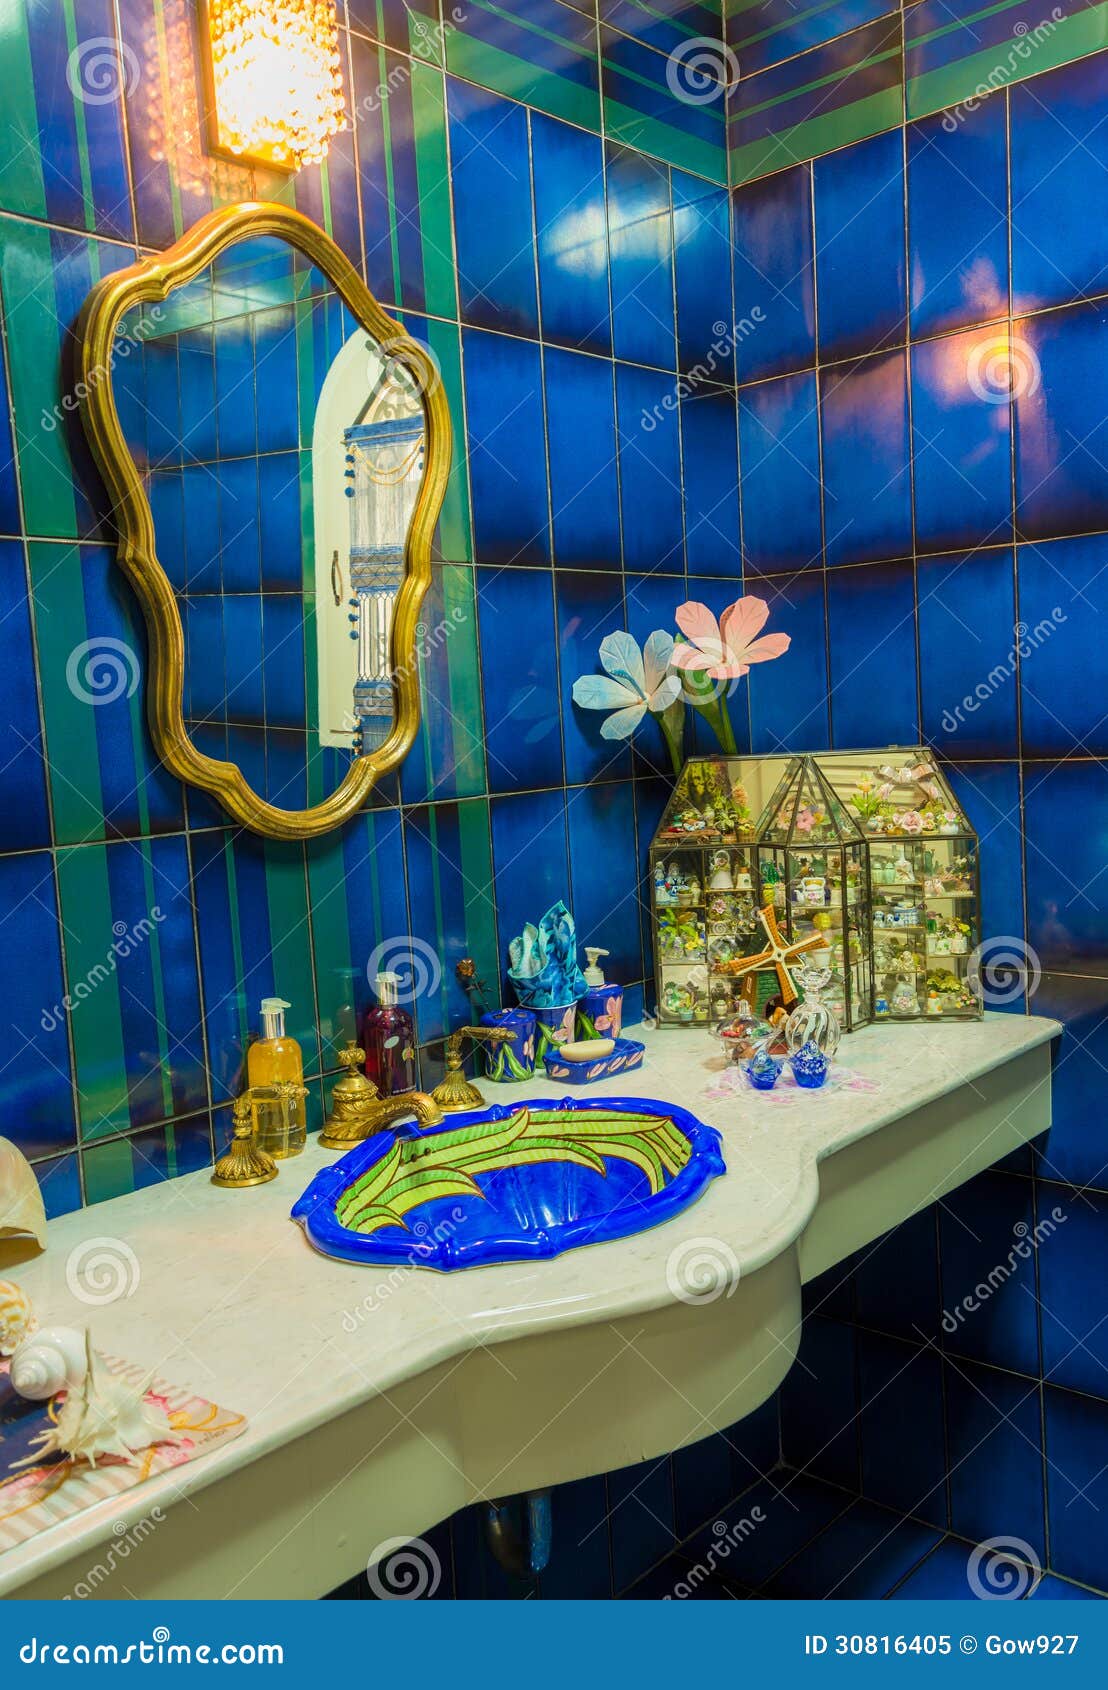 luxury toilet, decorate in marine style